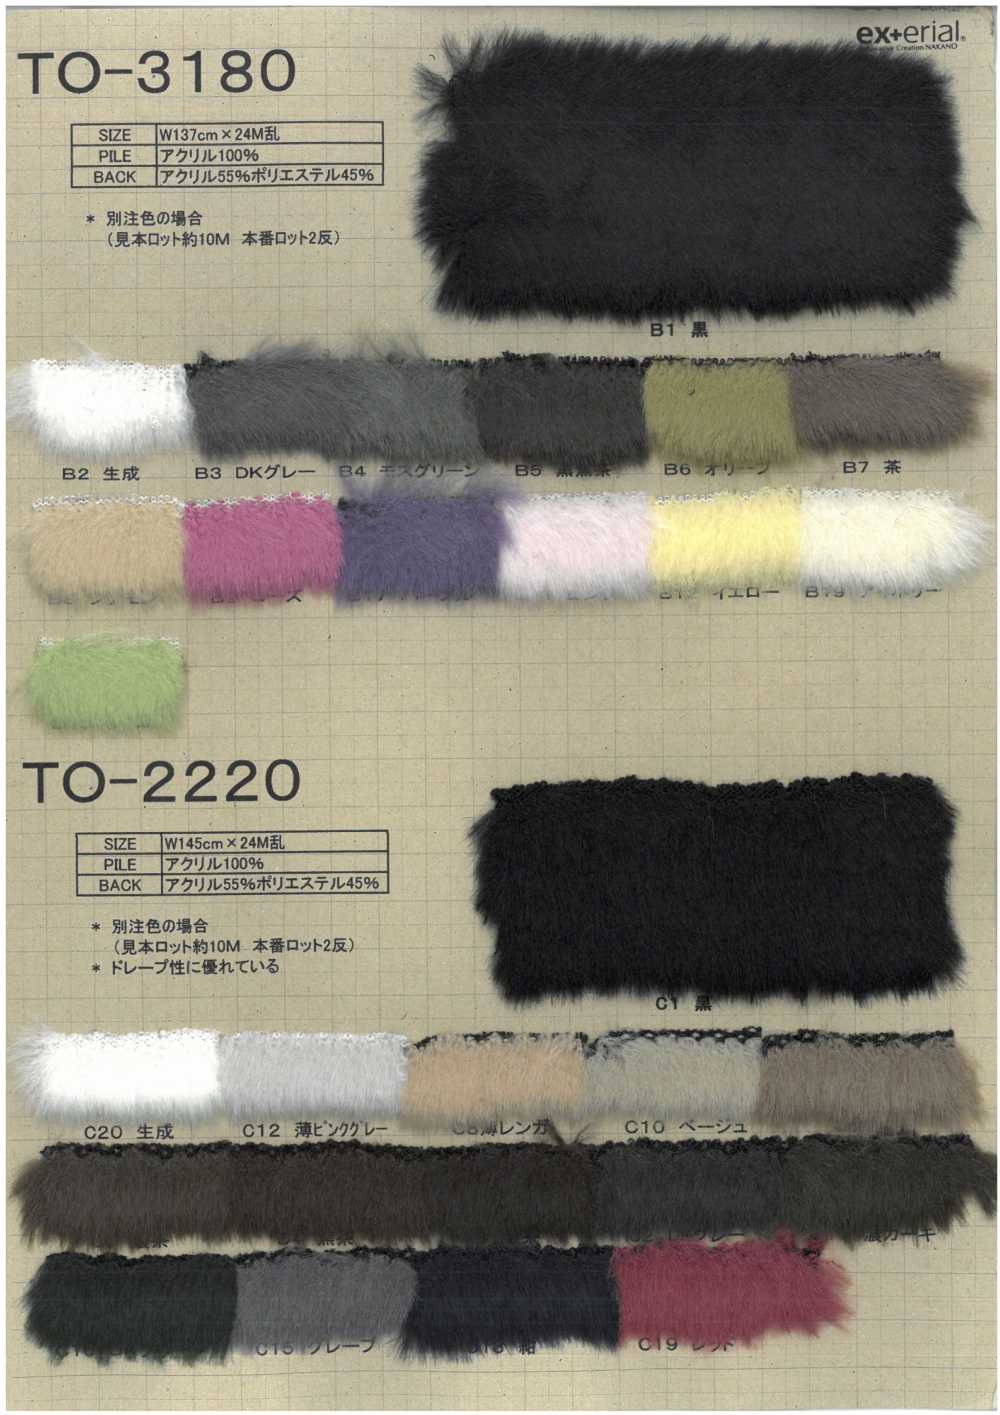 TO-3180 Piel Artesanal [Mouton][Fabrica Textil] Industria De La Media Nakano